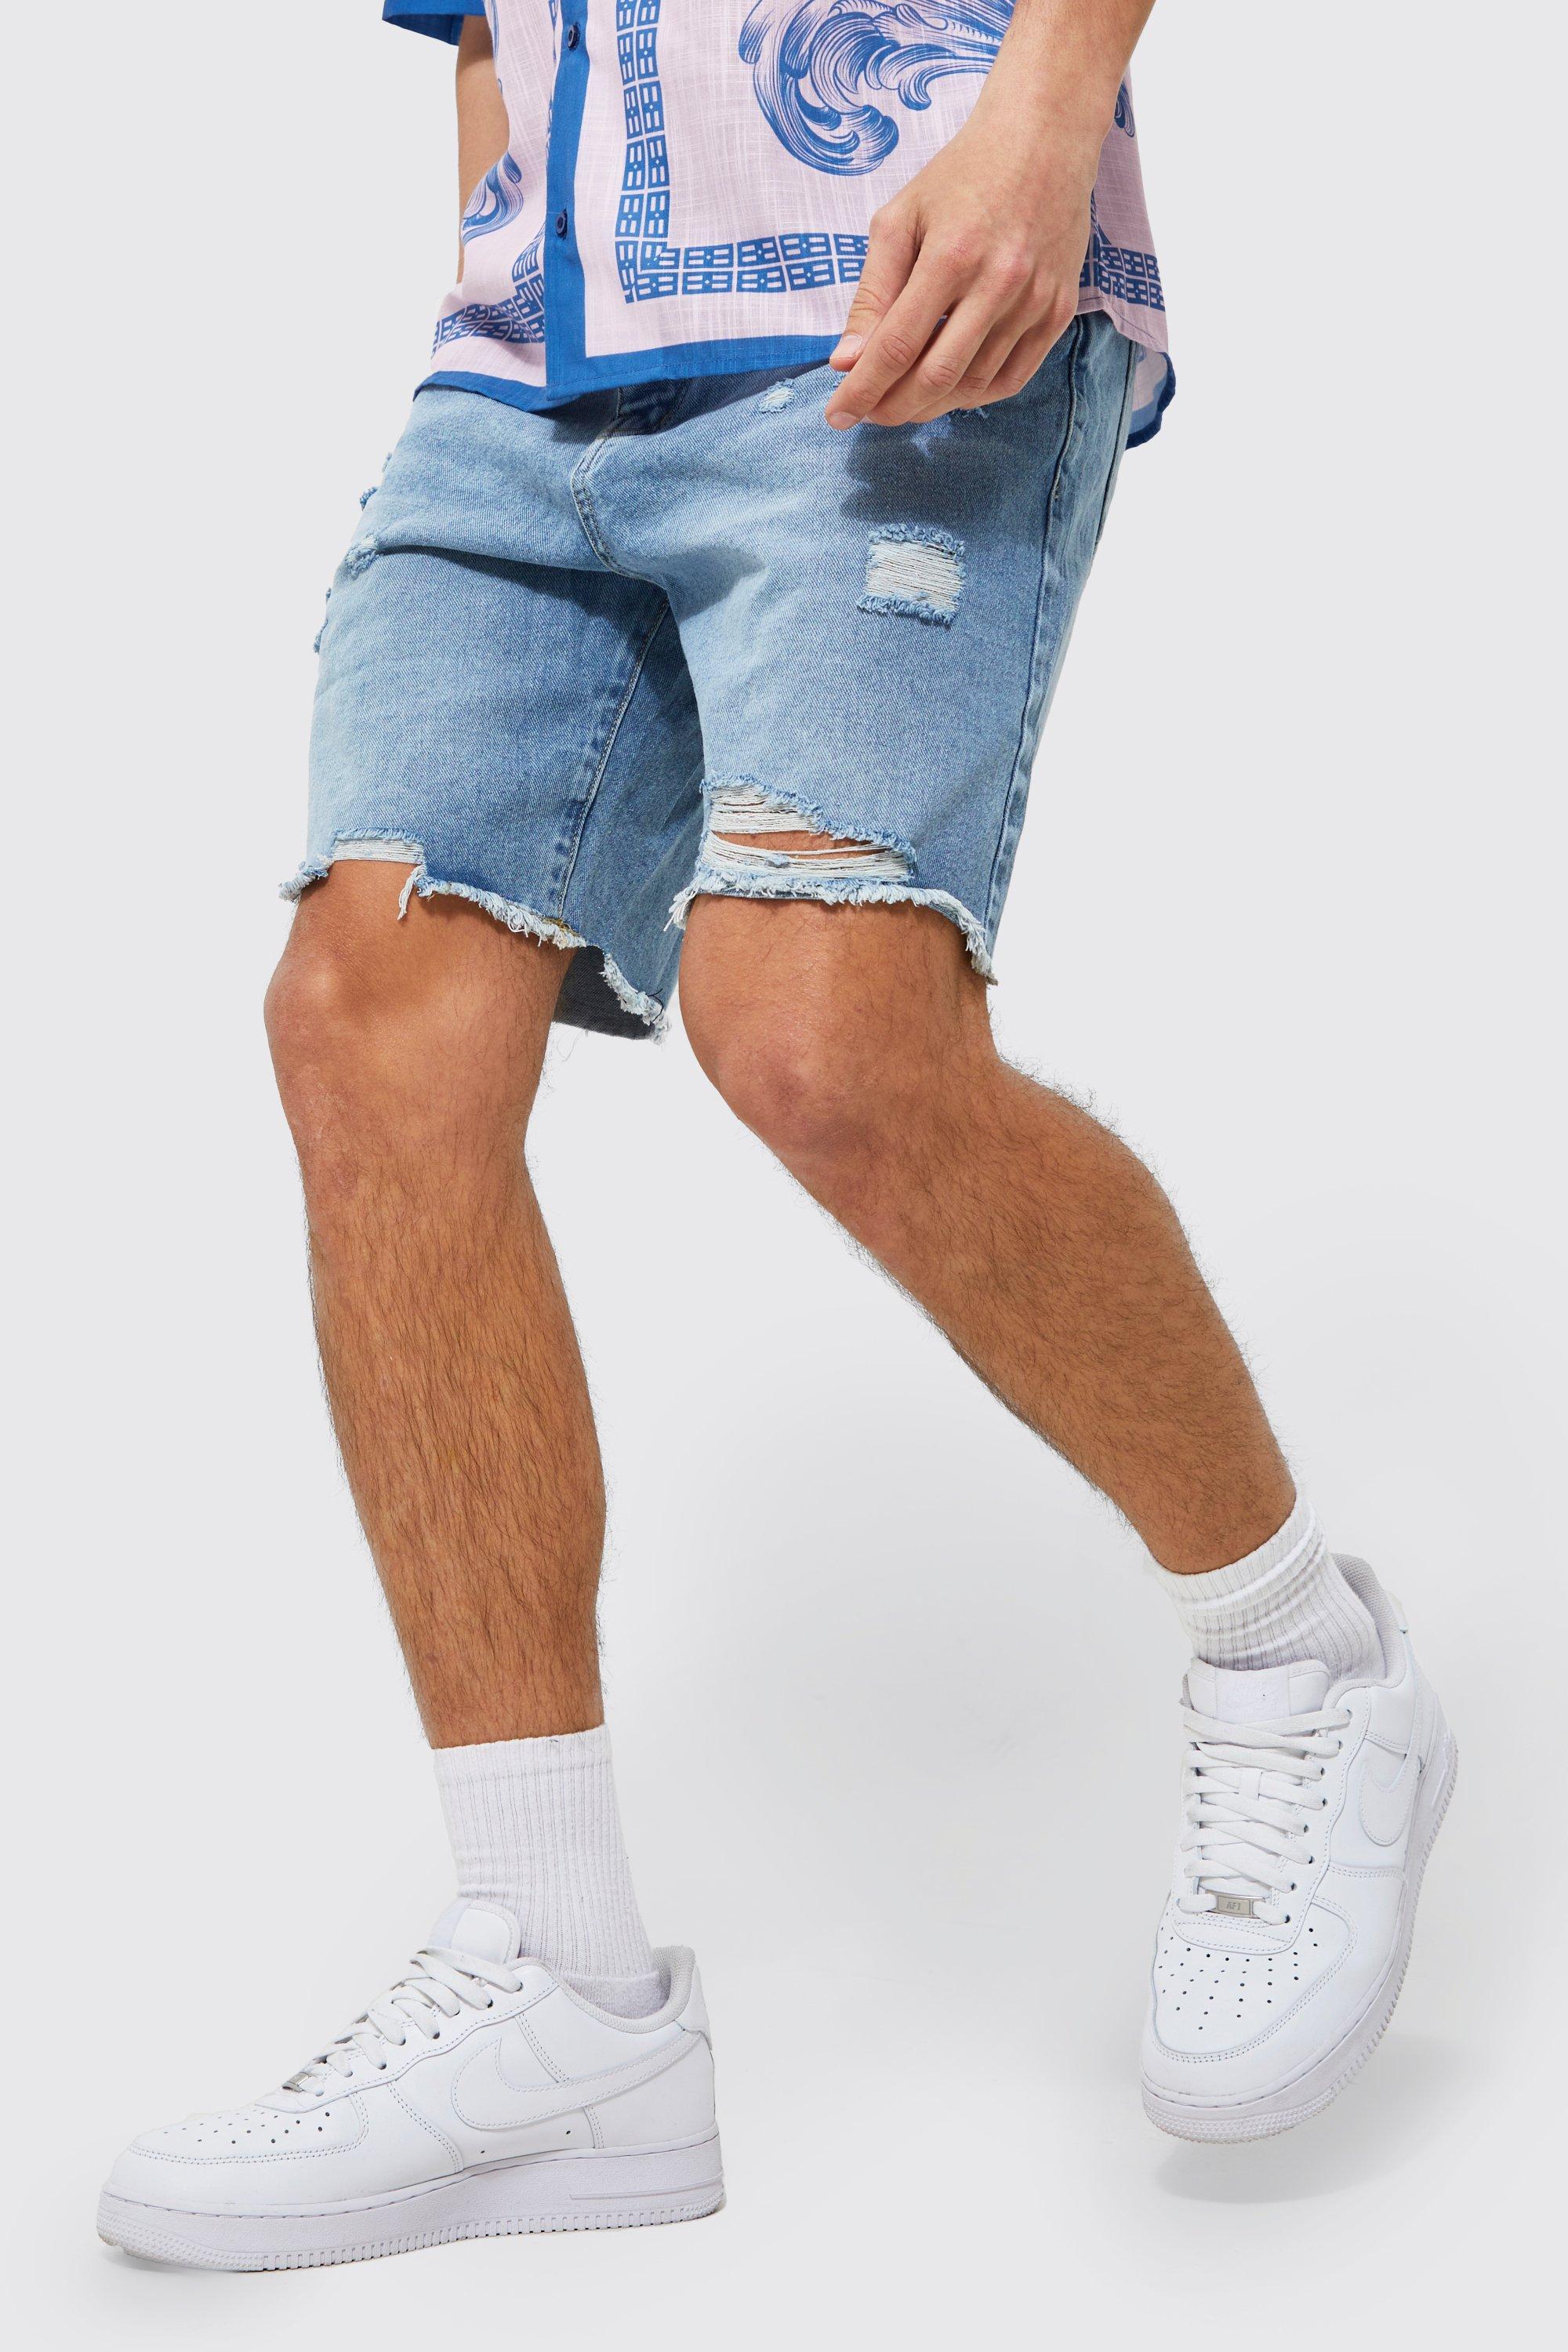 boohooMAN Mens Relaxed Fit Rigid Multi Rip Jean Shorts - Blue